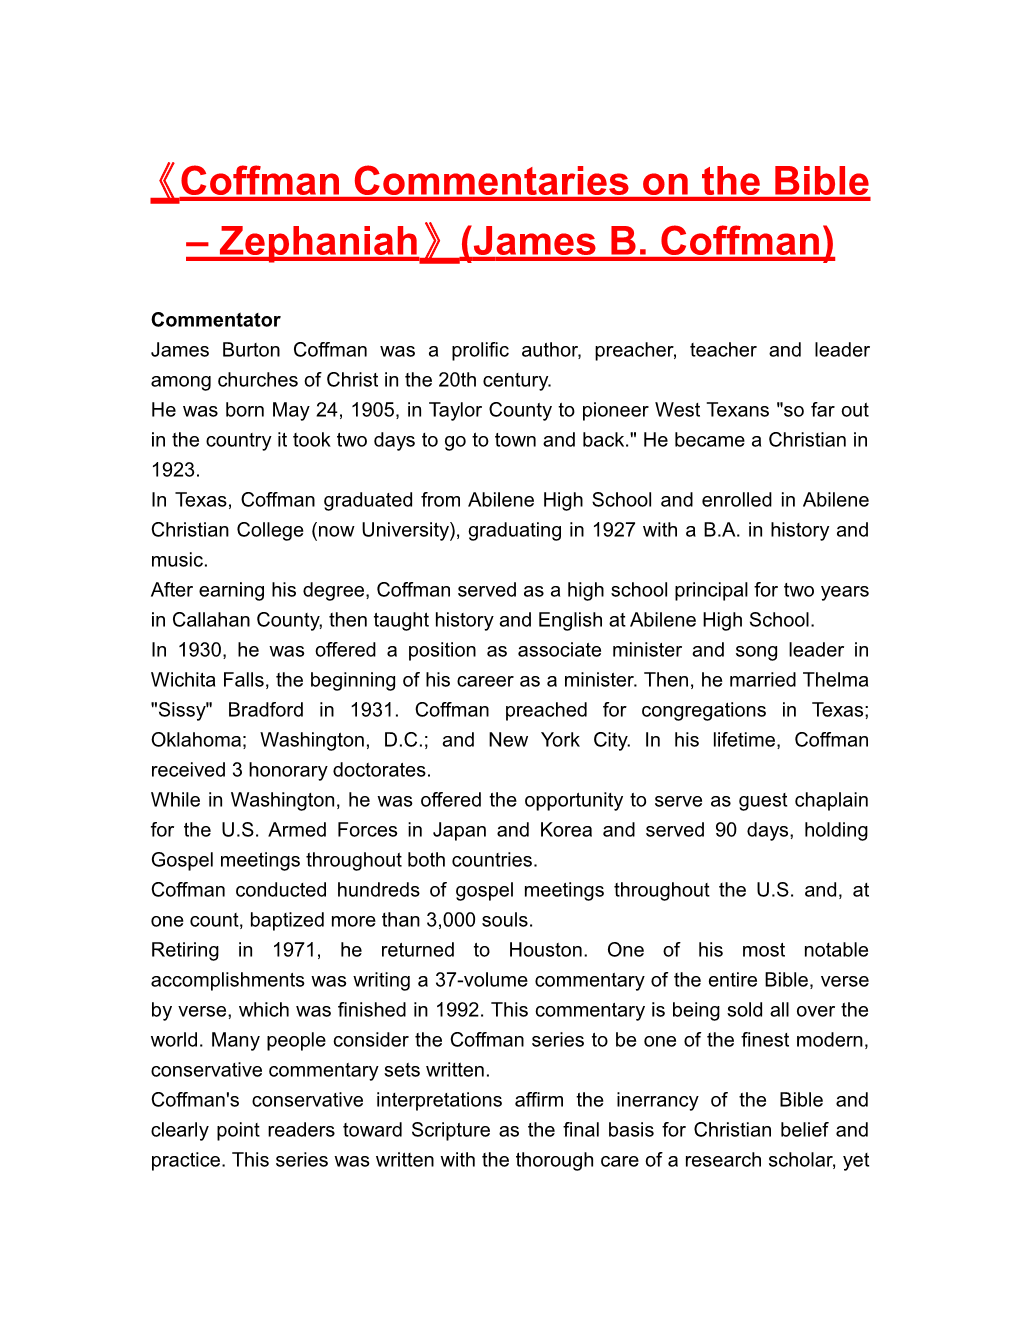 Coffman Commentaries on the Bible Zephaniah (James B. Coffman)